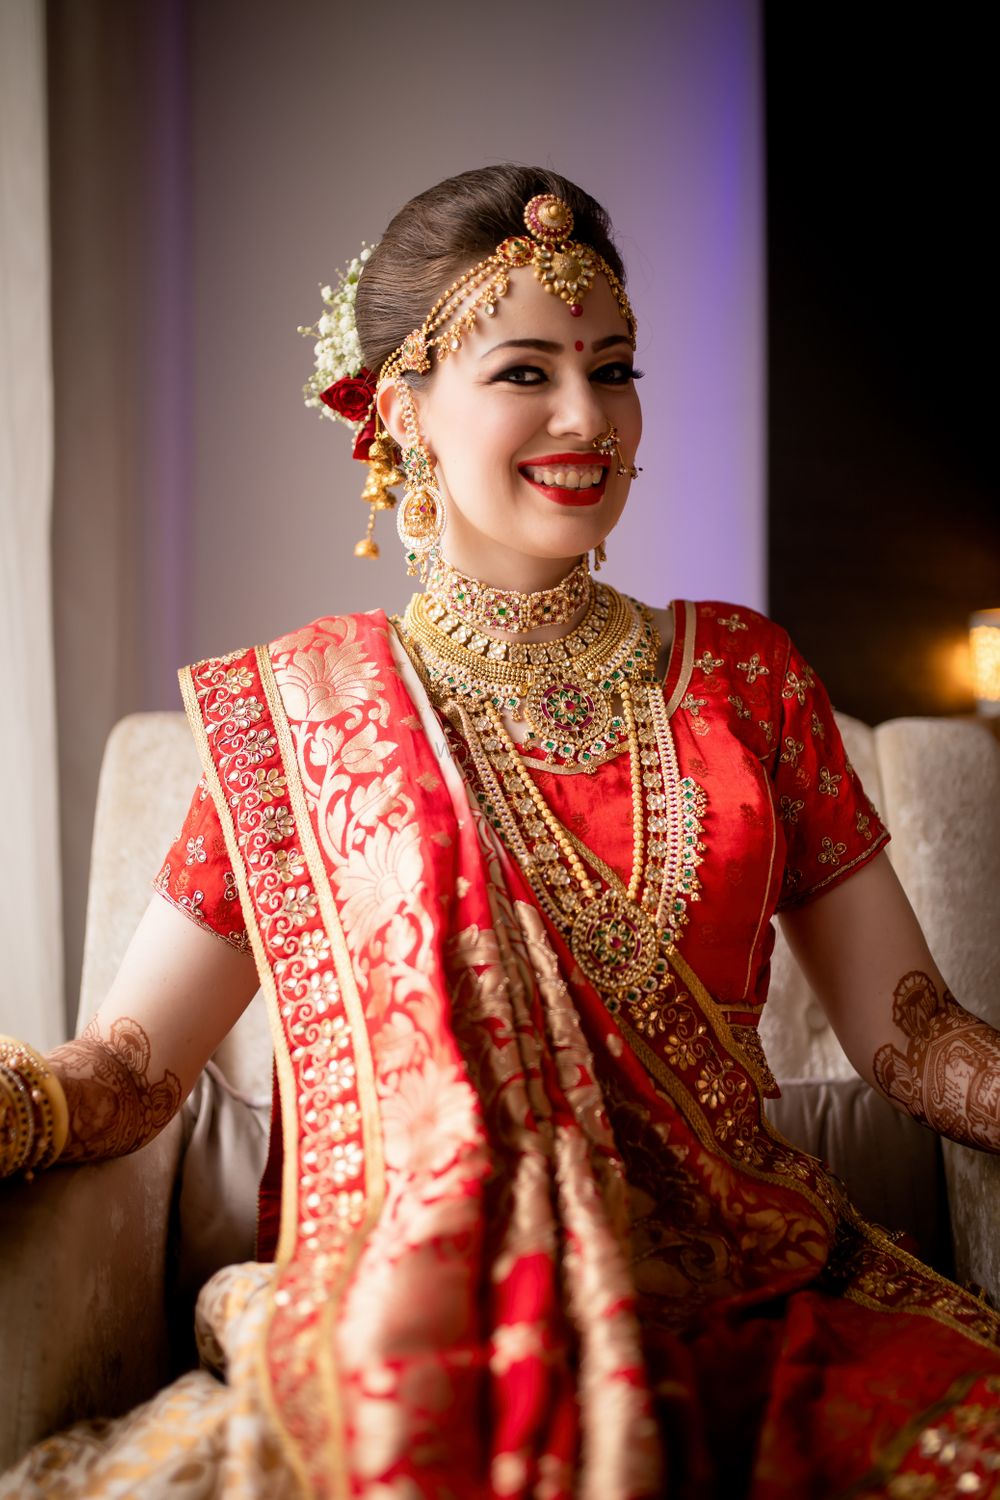 Photo of Happy bride in dazzling jewellery.